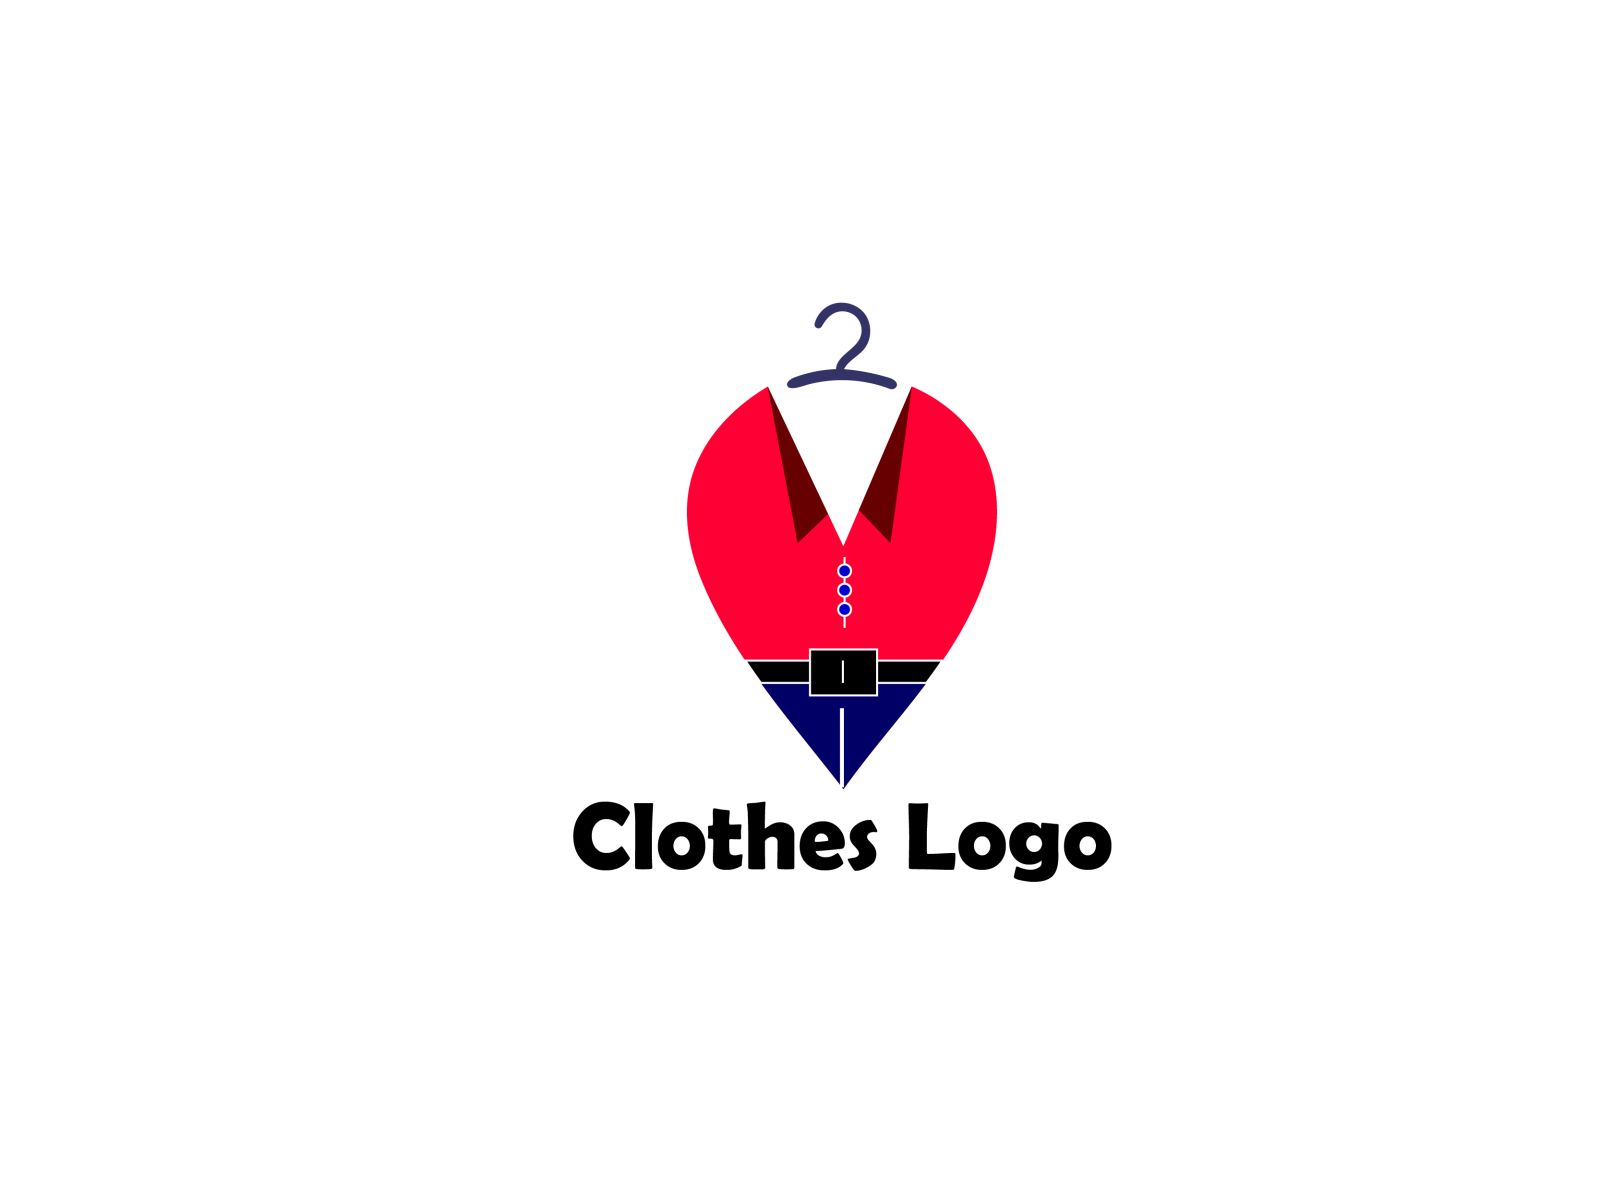 Clothes Logo by Baetiger Art on Dribbble